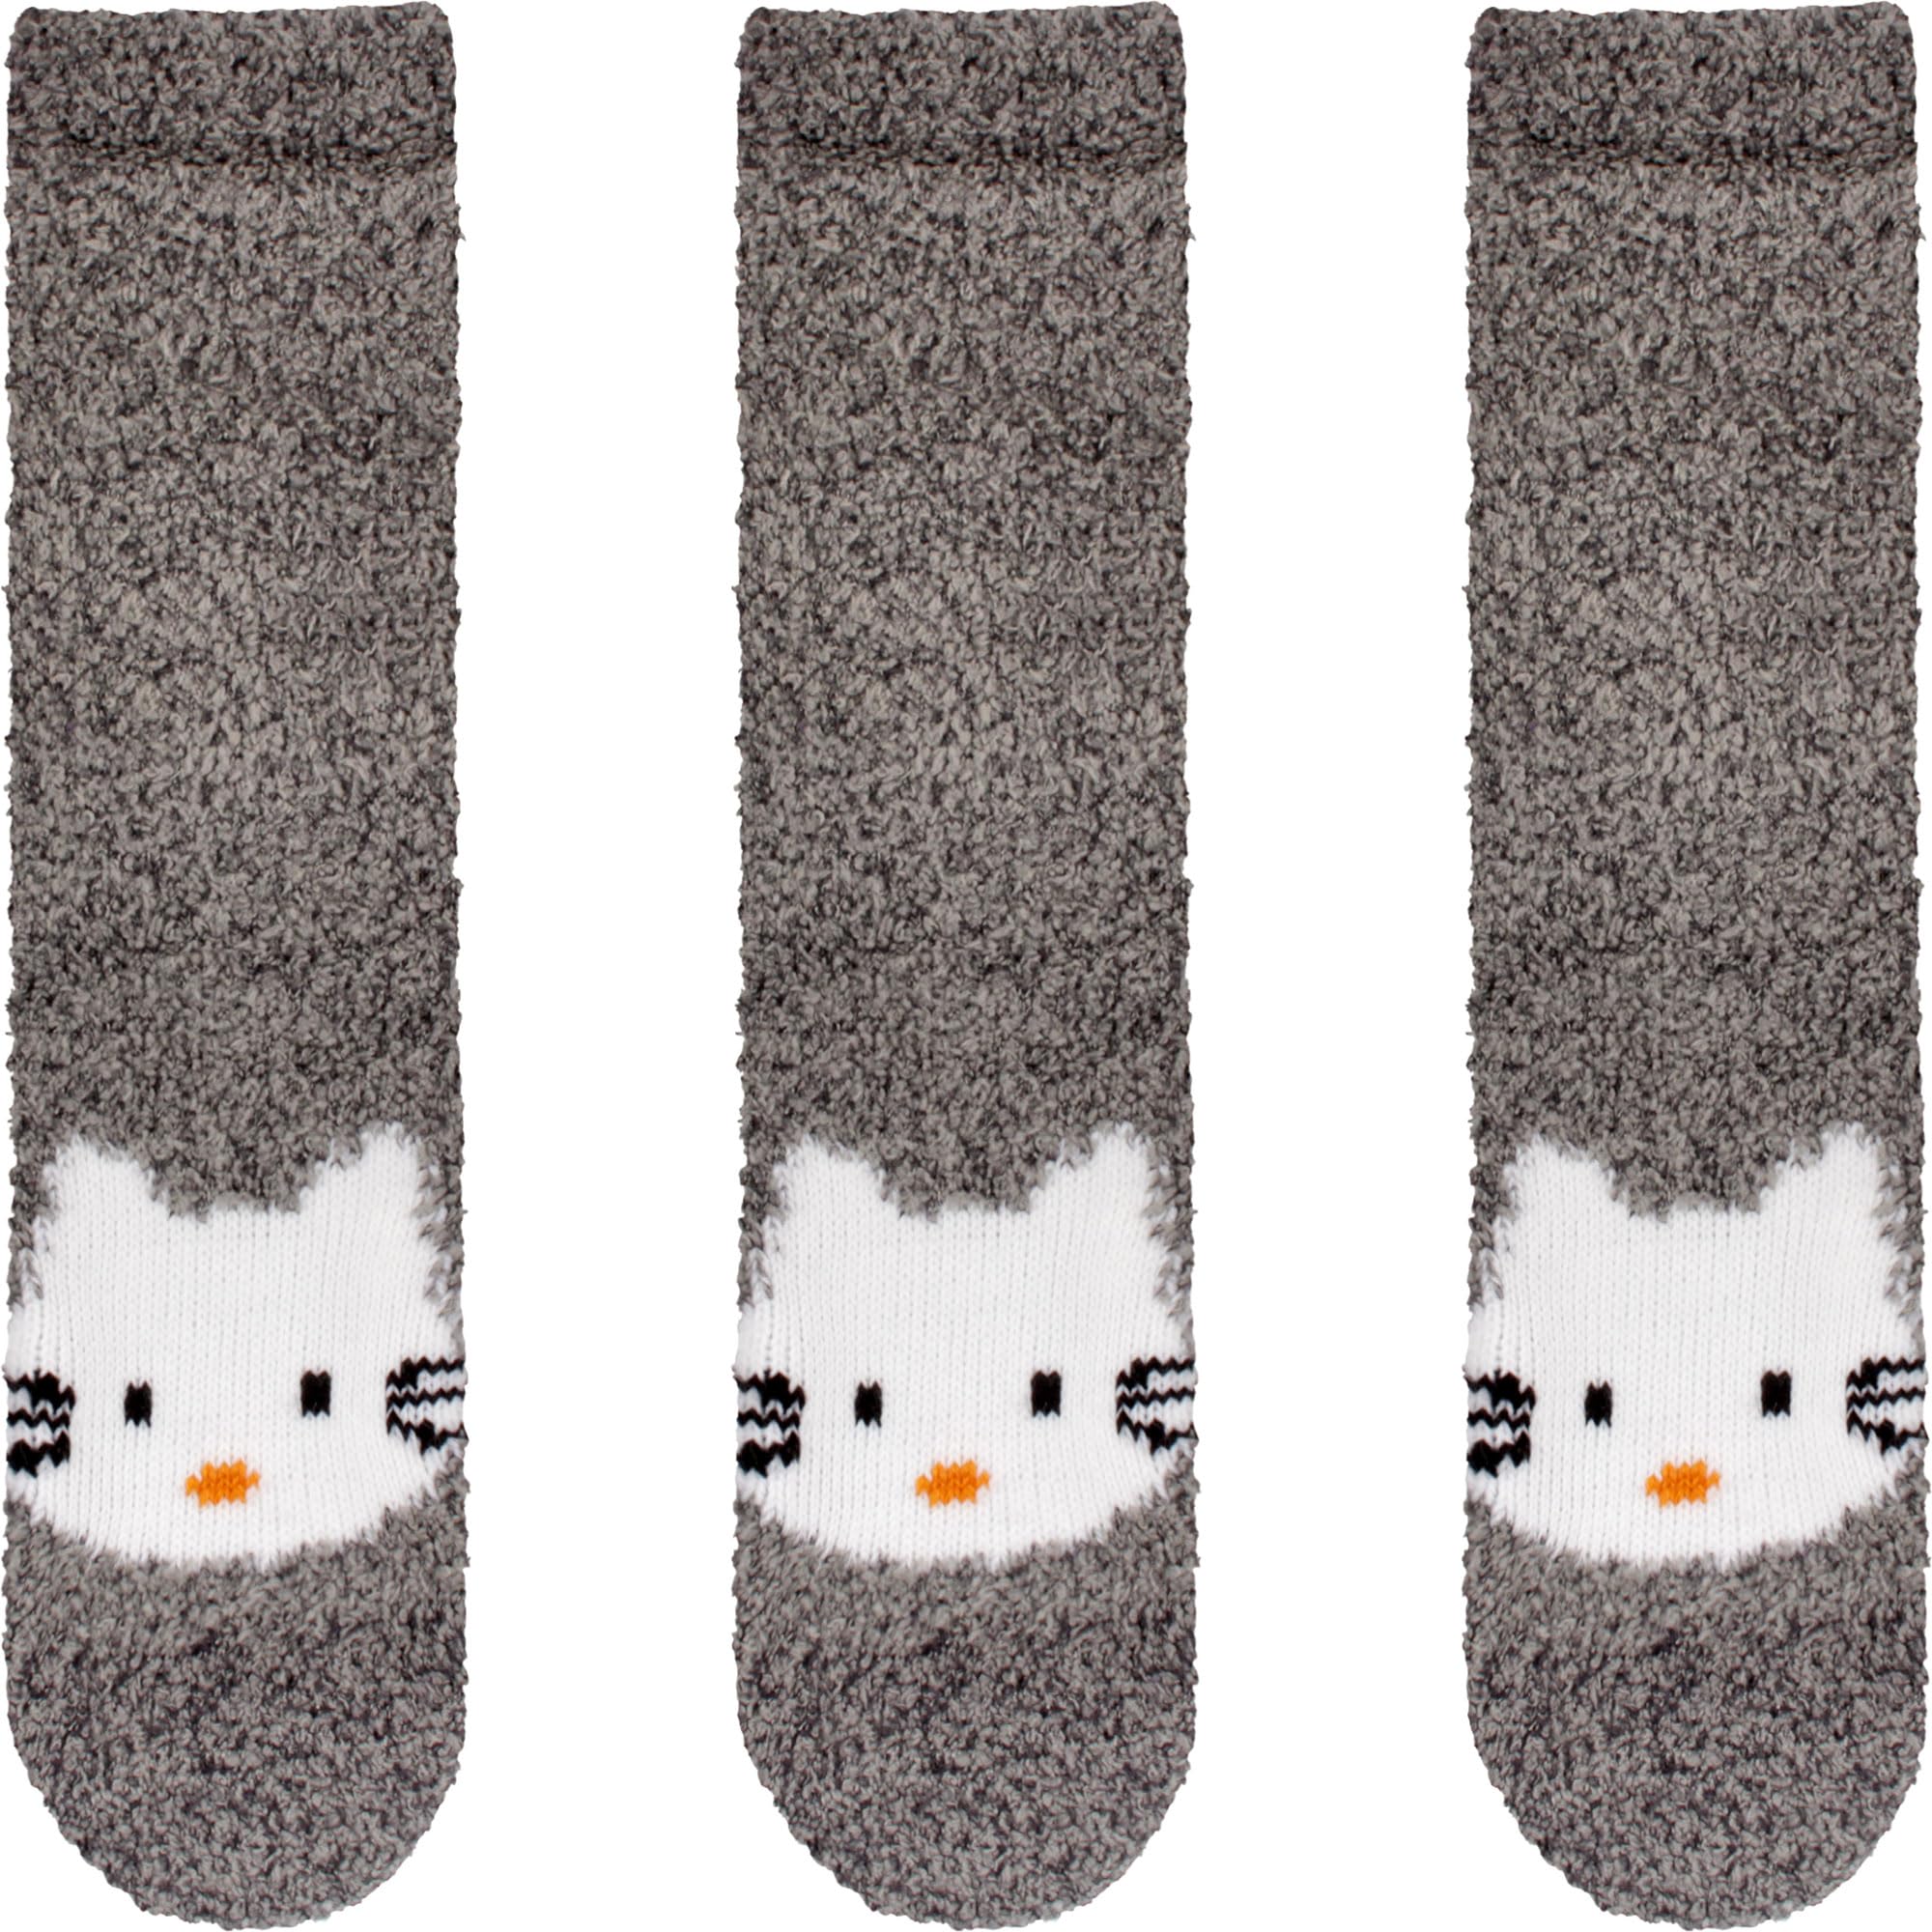 Super Soft Warm Cute Animal Non-Slip Fuzzy Crew Winter Socks - 06 Grey Kitty - 3 Pairs - Value Pack